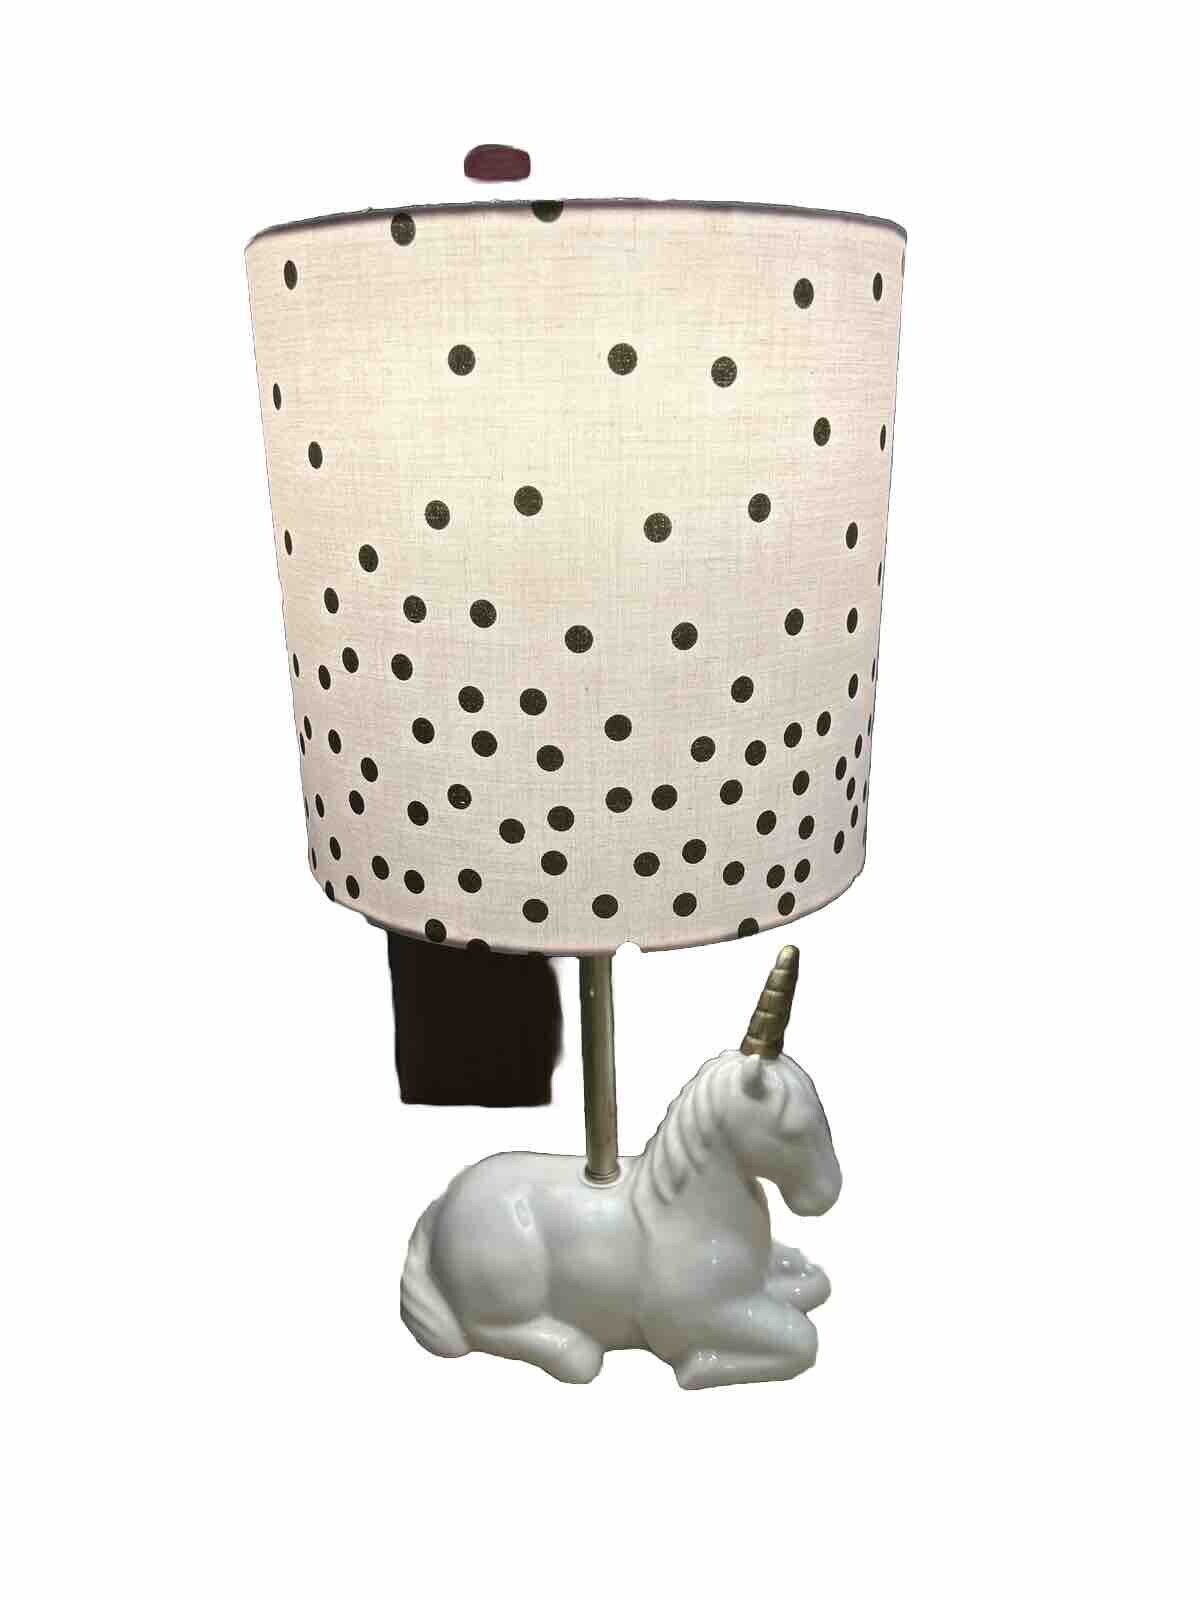 Ceramic White Unicorn Table Lamp 16” Tall Light Pink/gold Polka Dot Shade Works